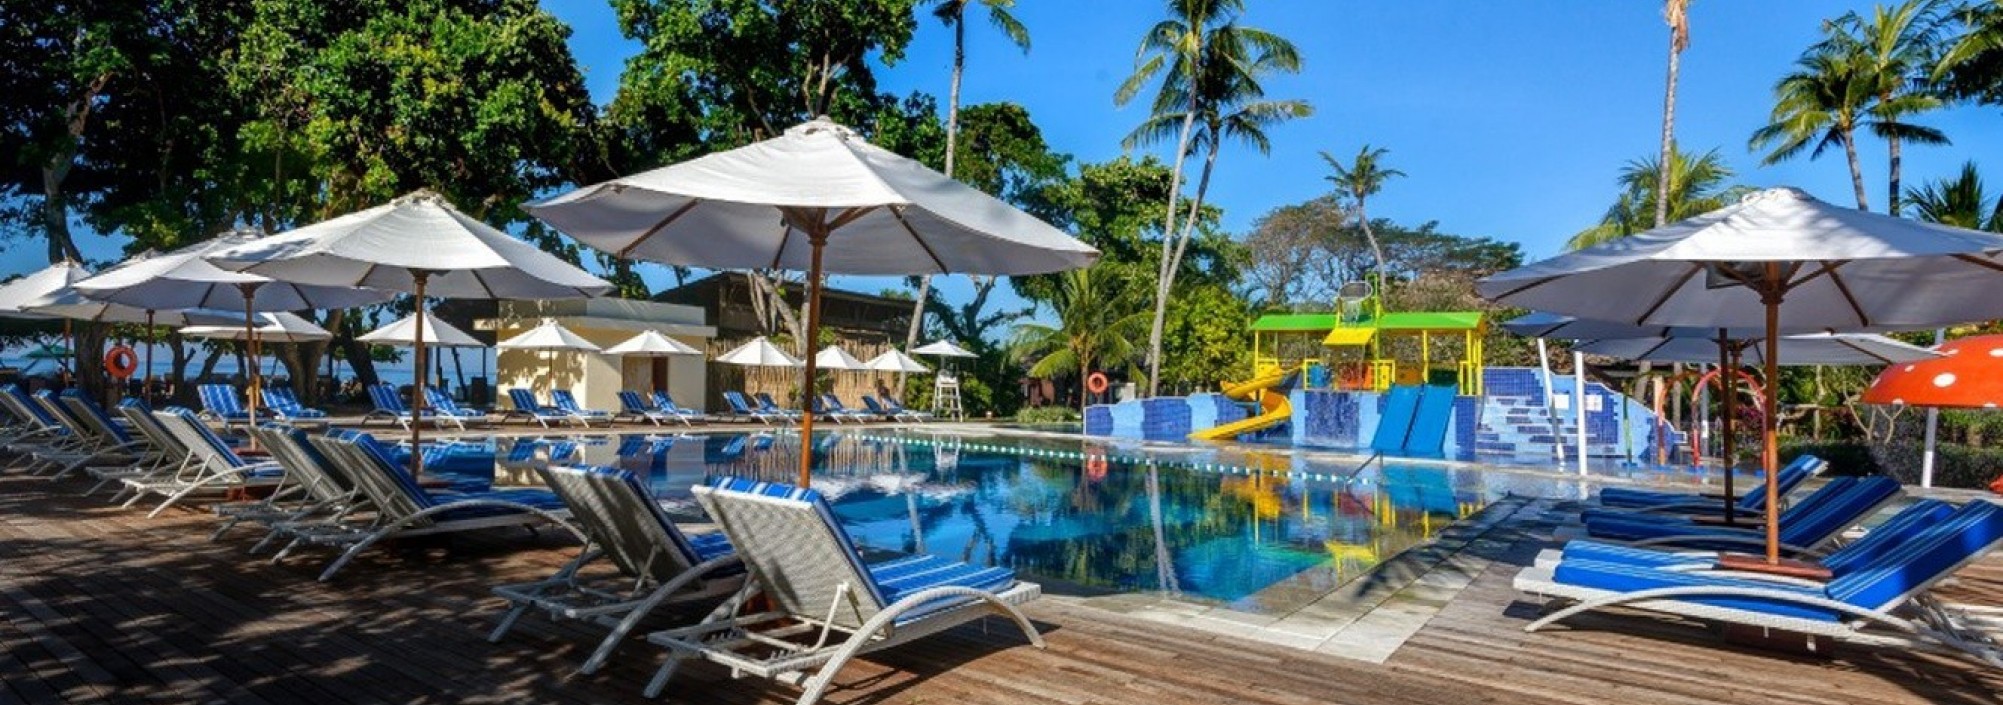 Prama Sanur Beach Hotel - Hotels in Sanur - Strandvakantie Bali - Bali